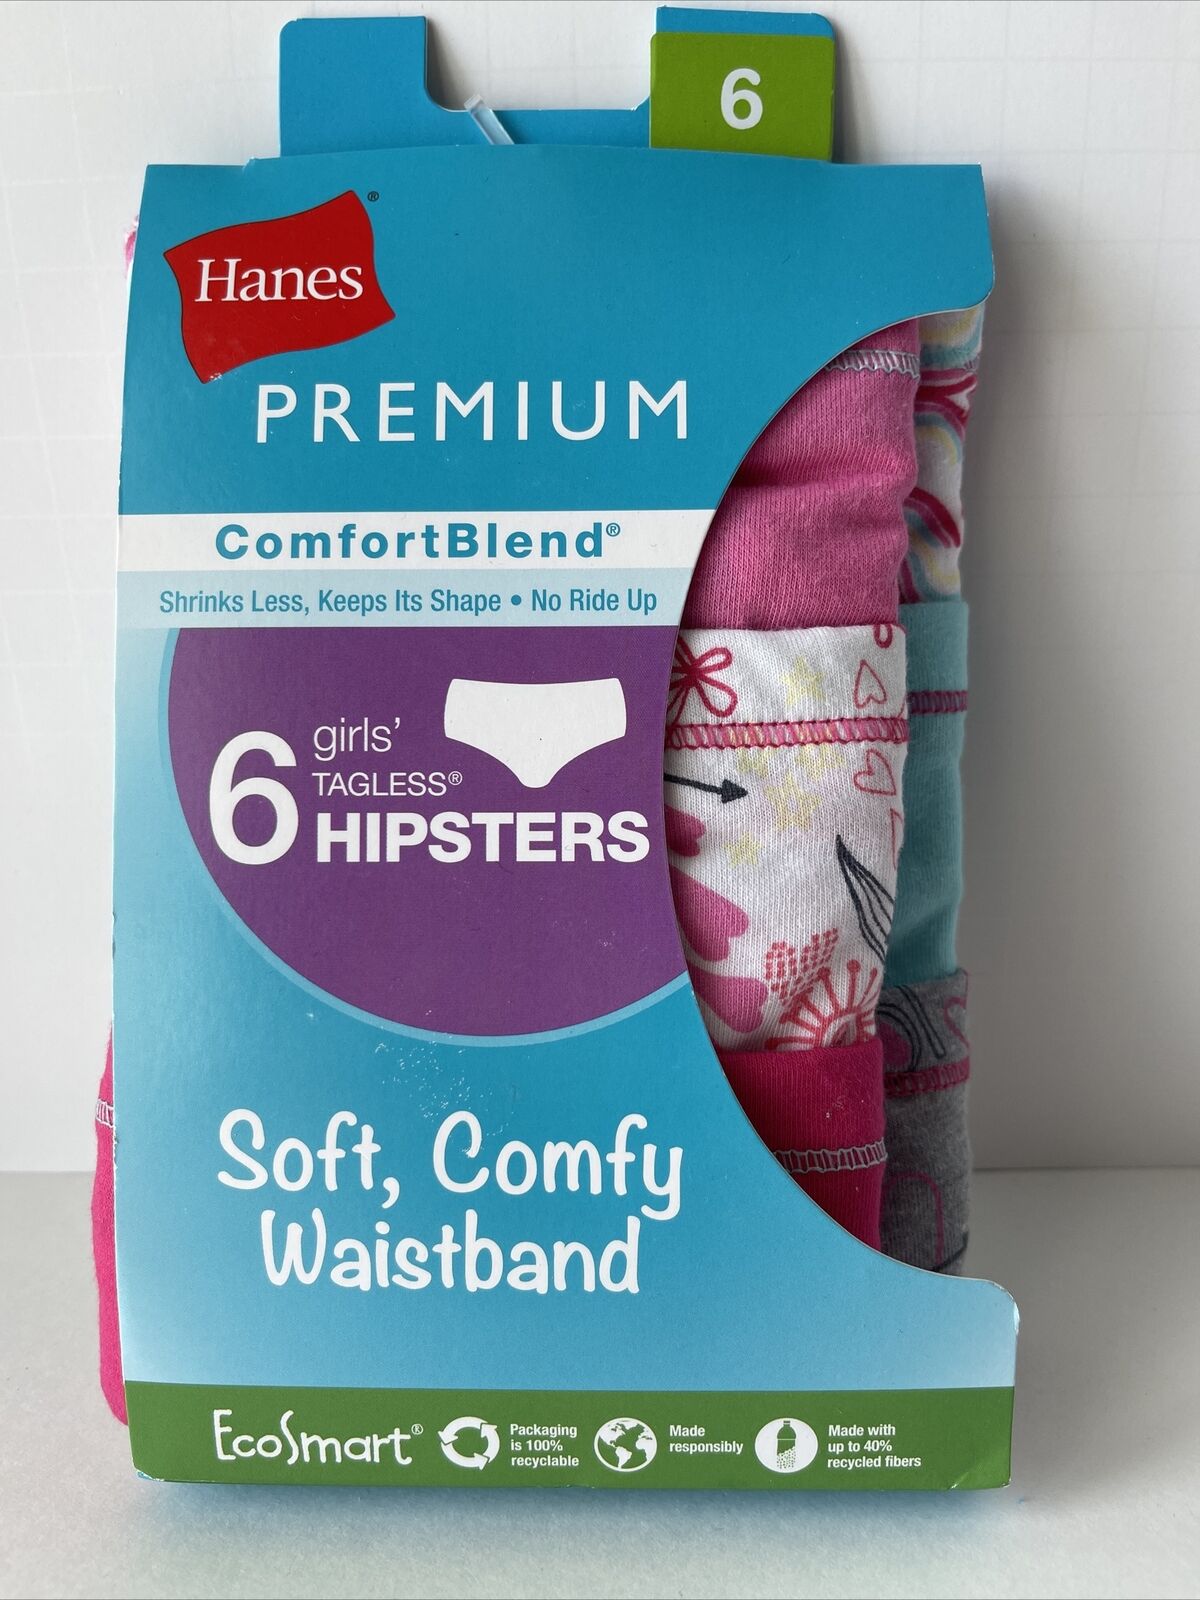 Hanes Premium Comfortblend 6 Pack Hipsters Underwear Tagless Girls Size 6